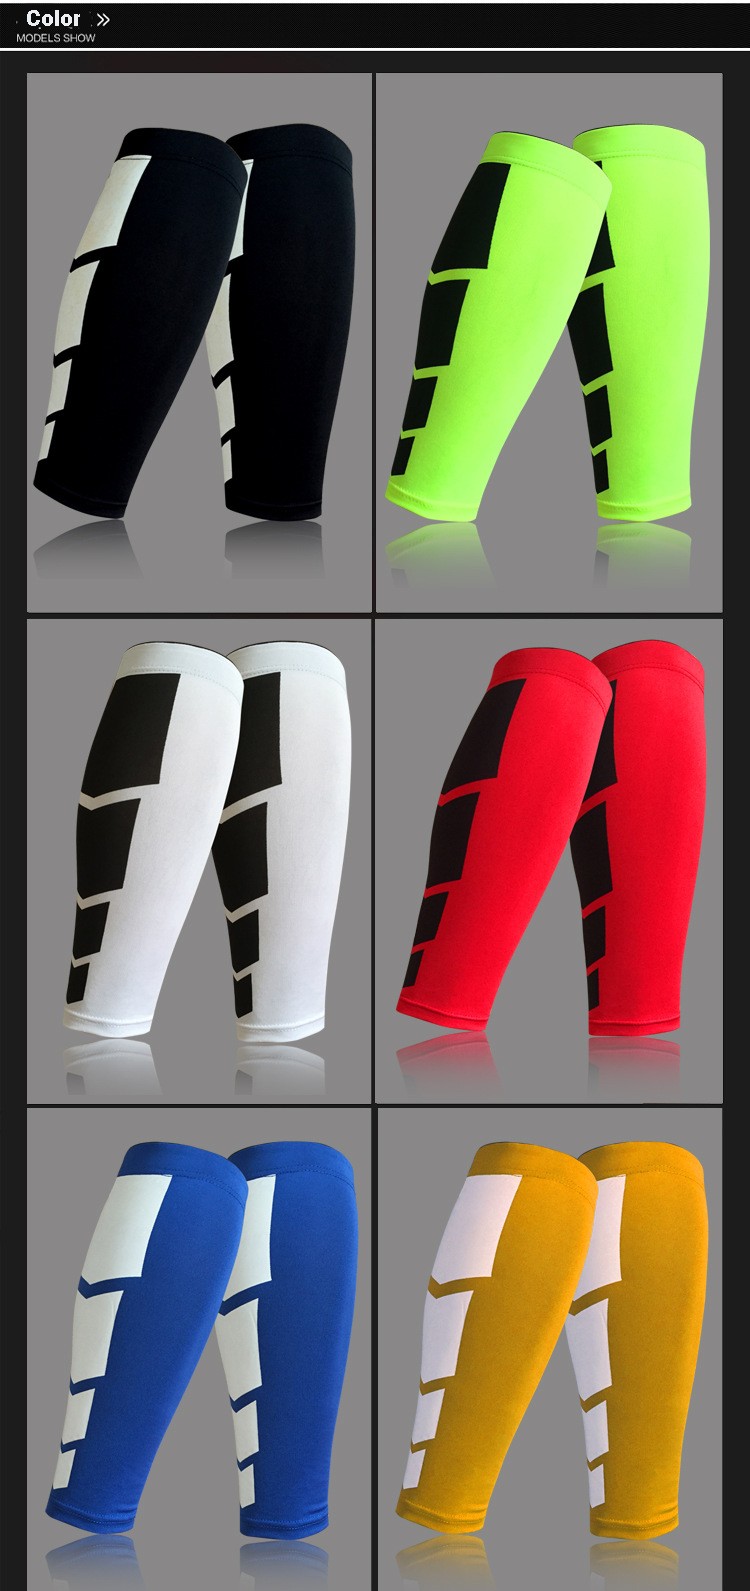 1Pair-Running-Leg-Sleeve-Men-Women-Cycling-Leg-Warmers-Football-Basketball-Badminton-Calf-Sleeves-Co-32675390179